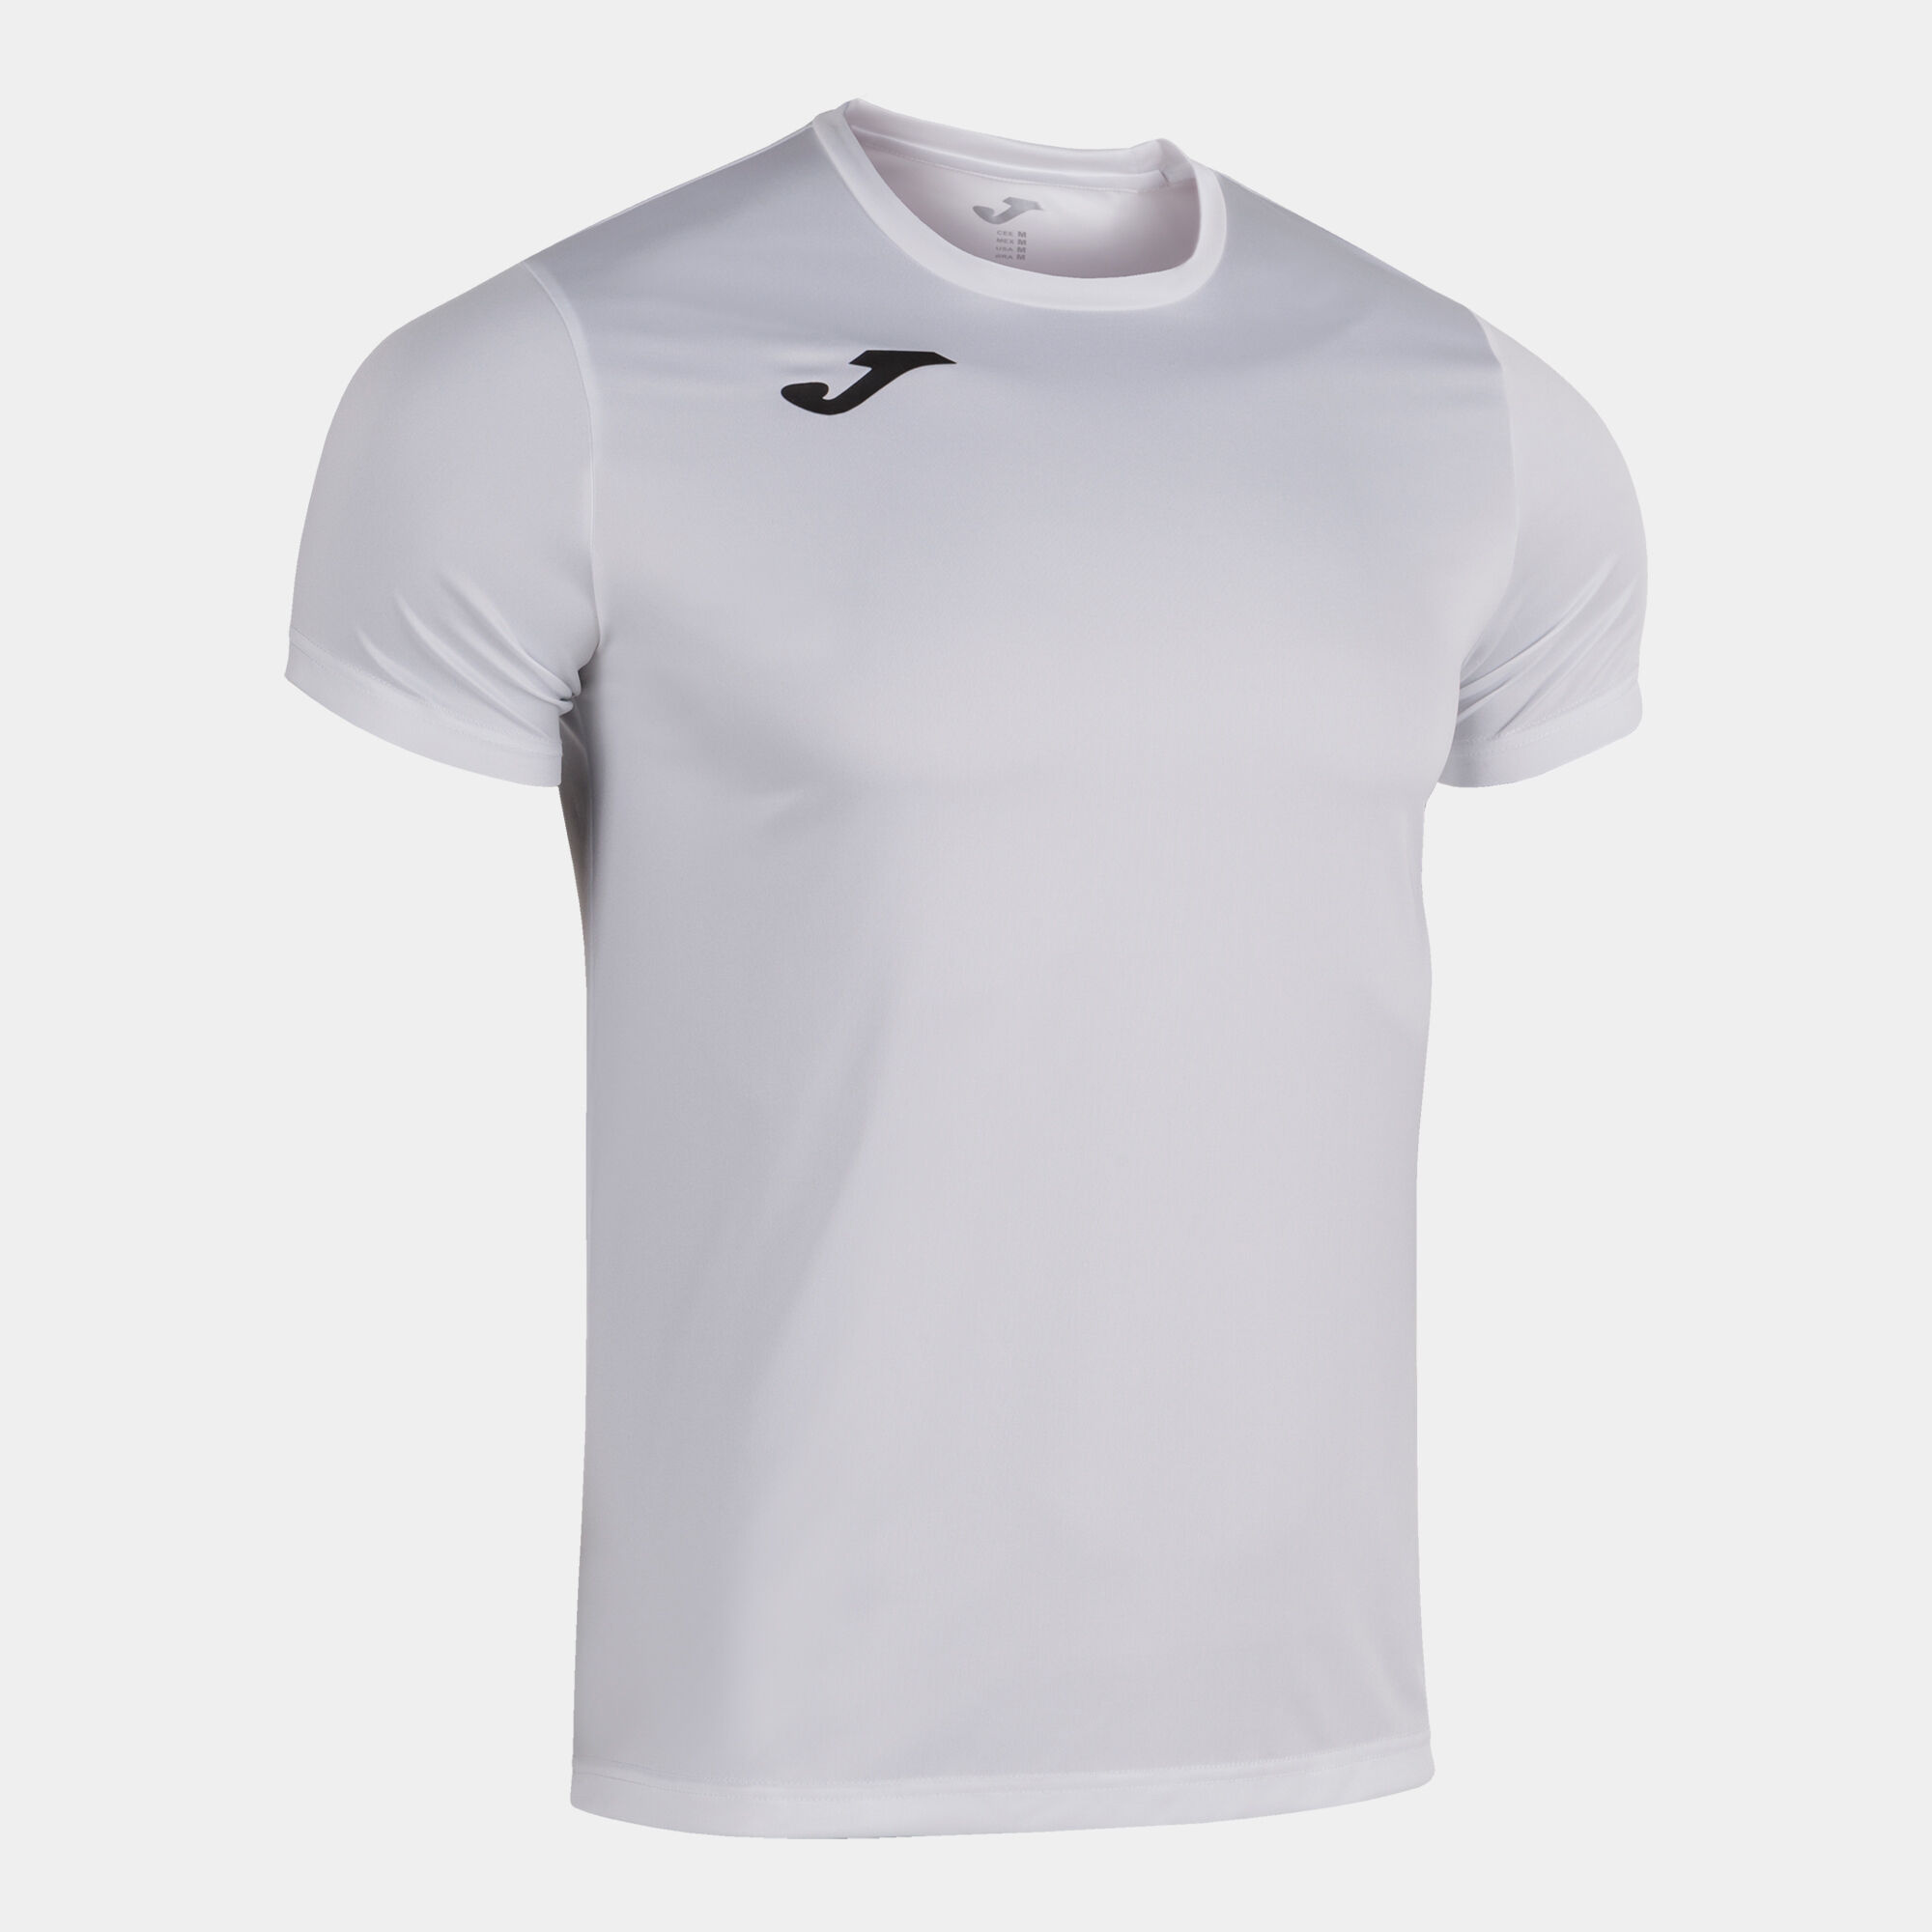 Camiseta Masculina Branca - LV - K4 STORE